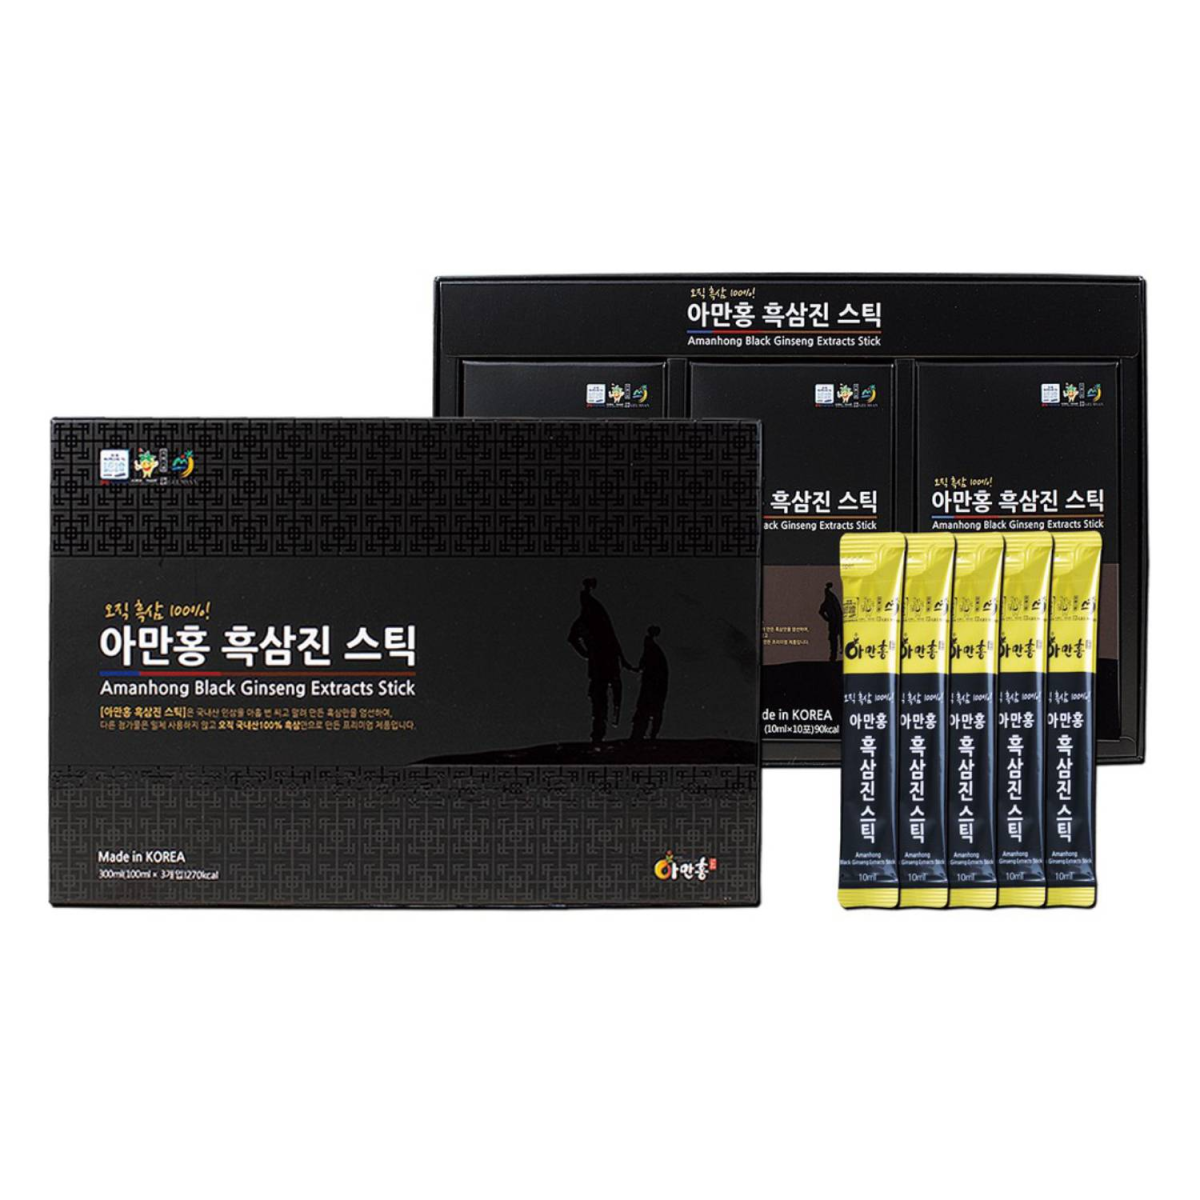 CHAMHANSAM KOREAN AUTHENTIC BLACK GINSENG/STICK/Amanhong(10ml x 30 sachets)/HEALTH